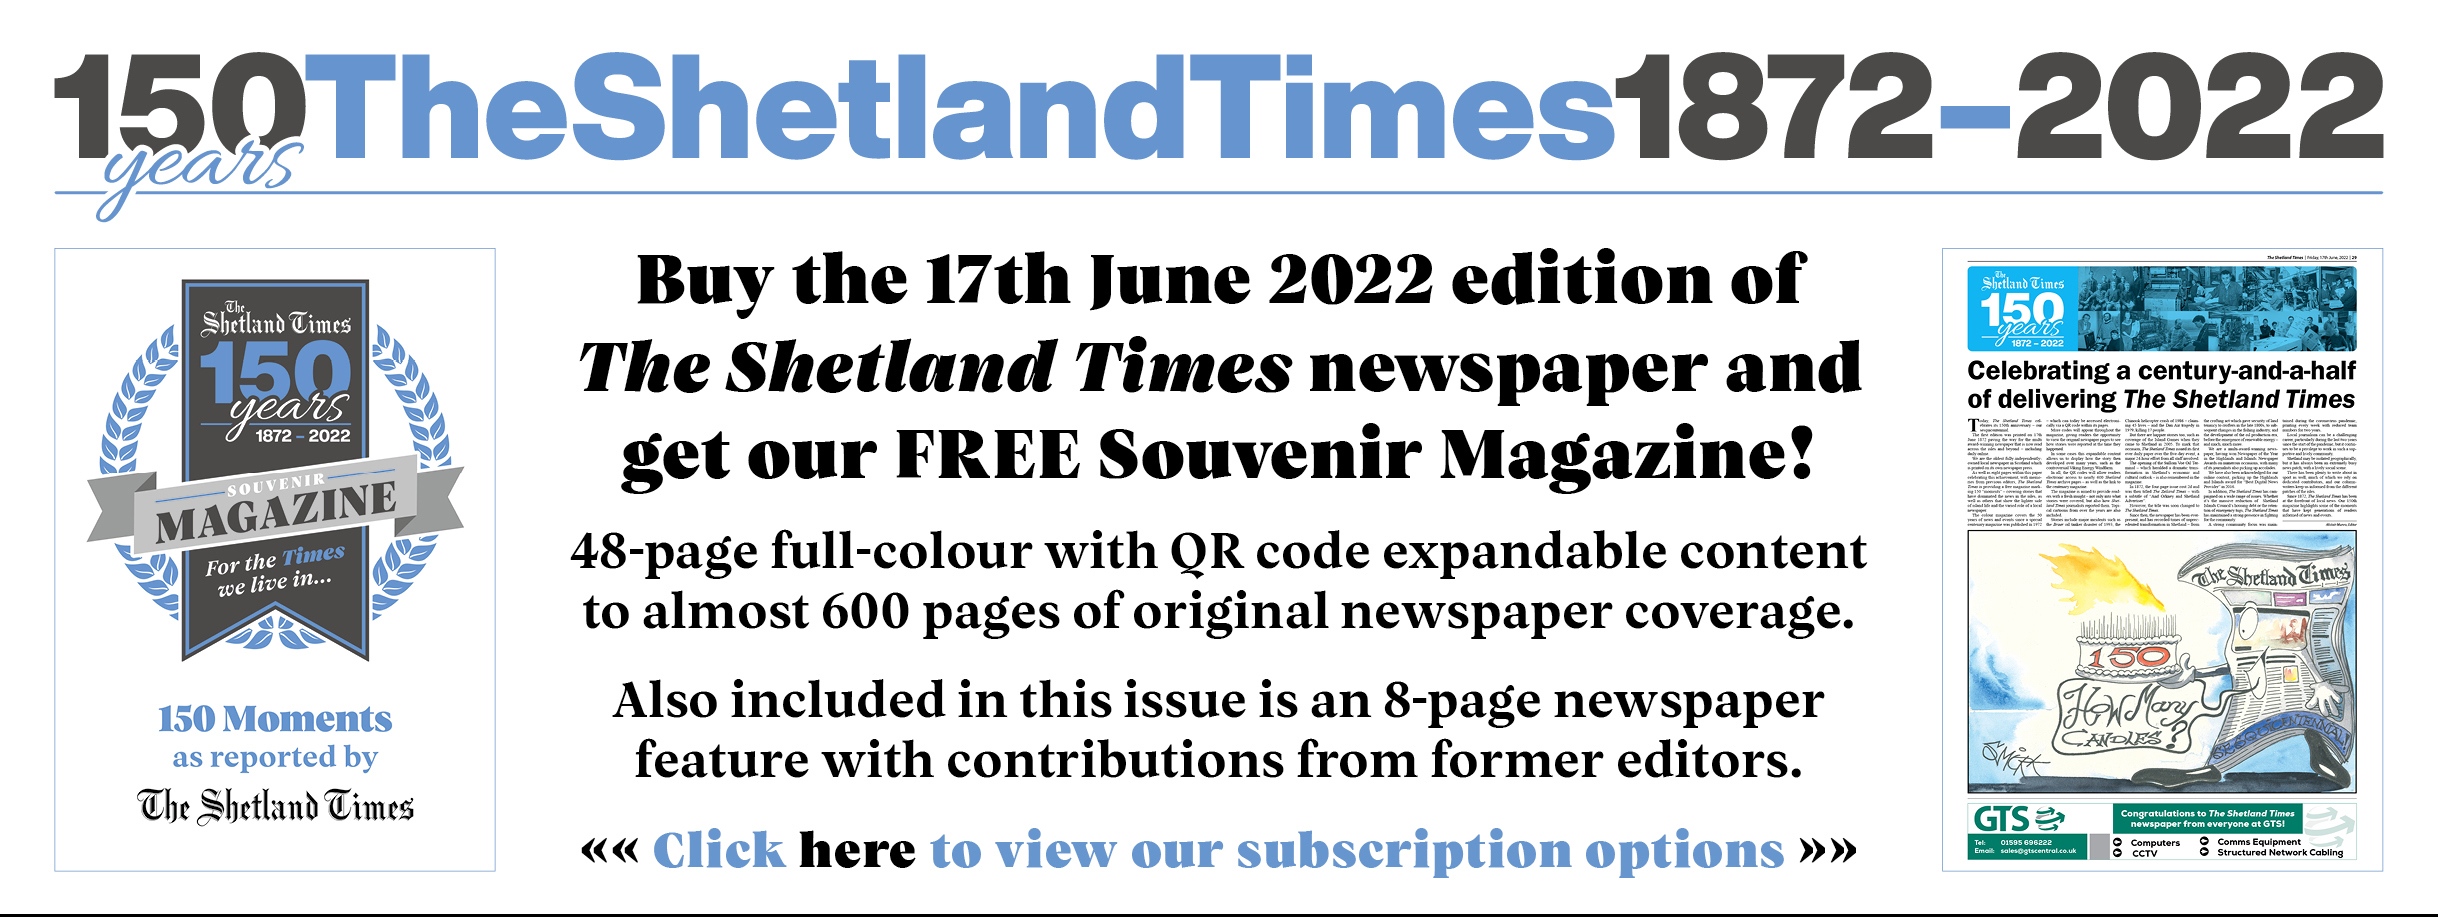 Shetland Times Insert - Special Offer